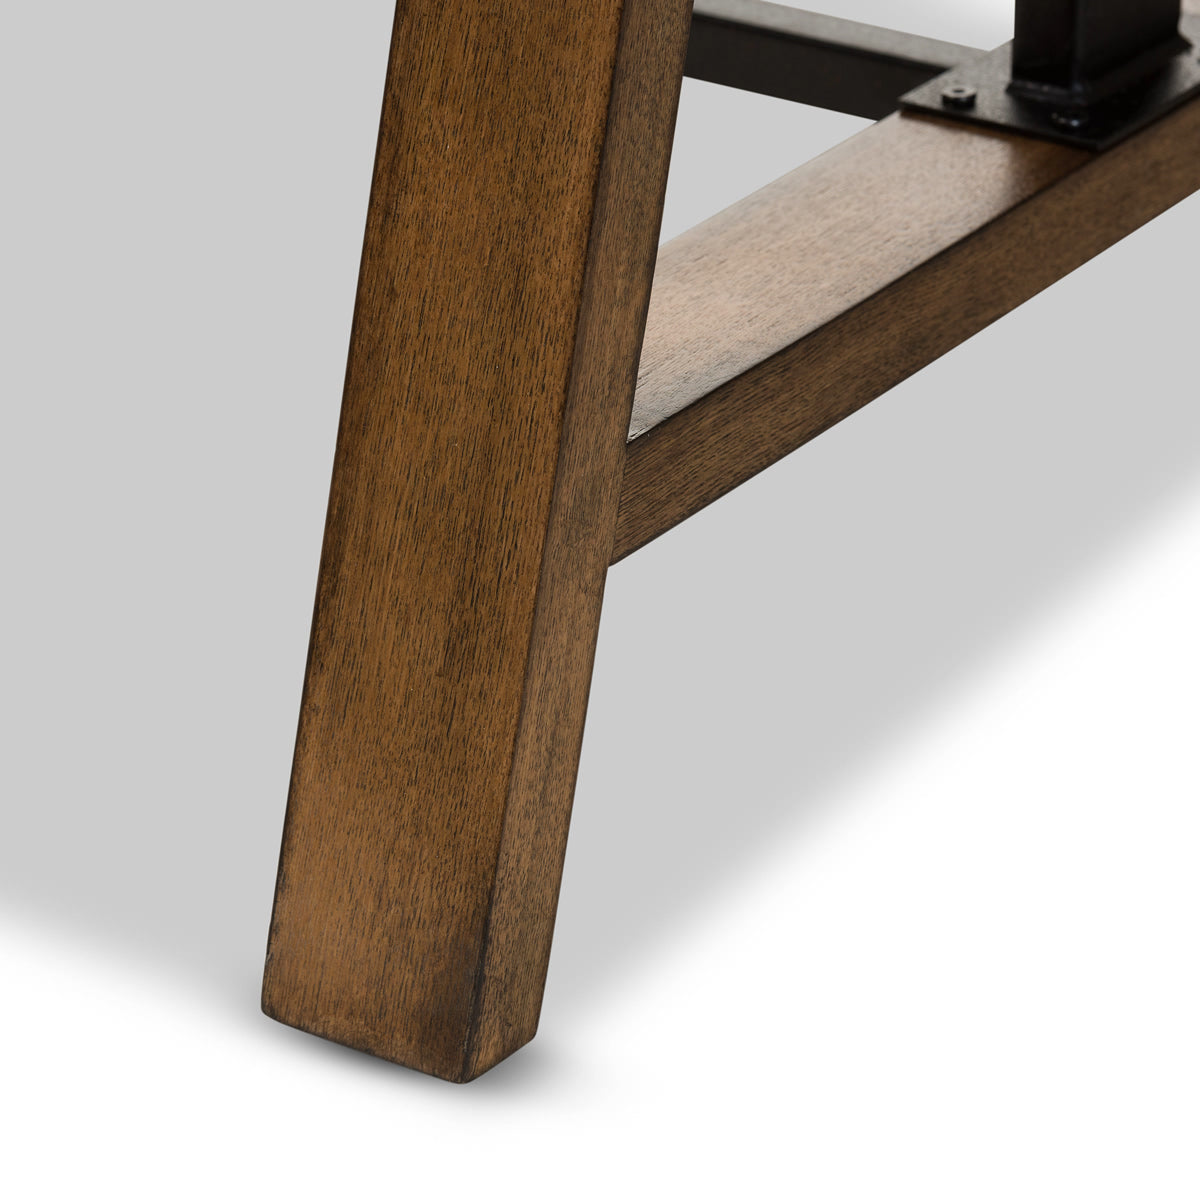 Baxton Studio Nico Rustic Industrial Metal and Distressed Wood Adjustable Height Work Table Baxton Studio-Desks-Minimal And Modern - 6